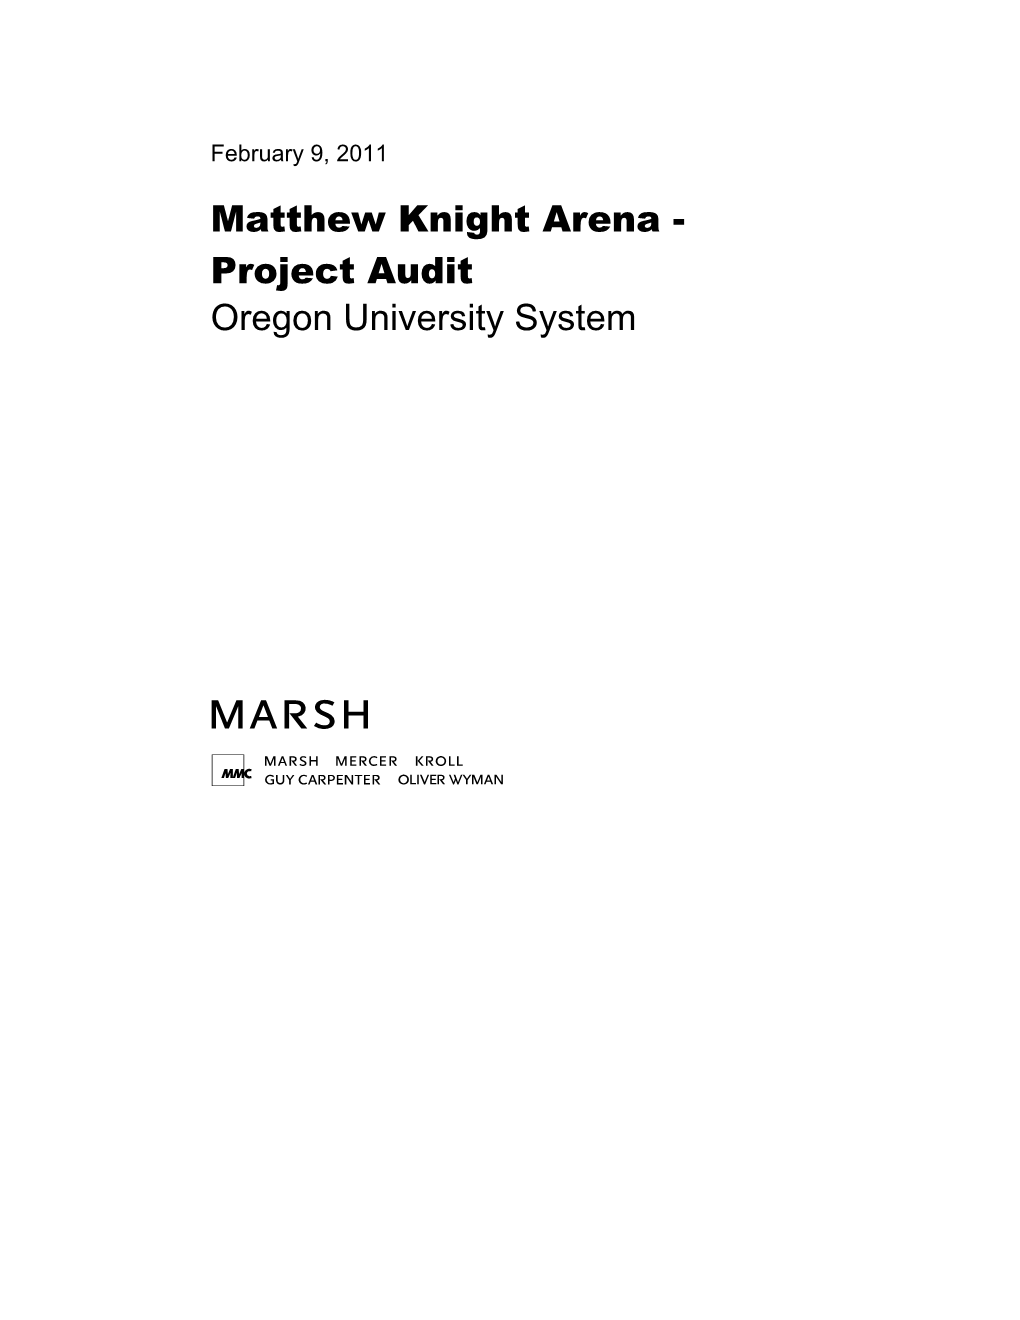 Matthew Knight Arena - Project Audit Oregon University System